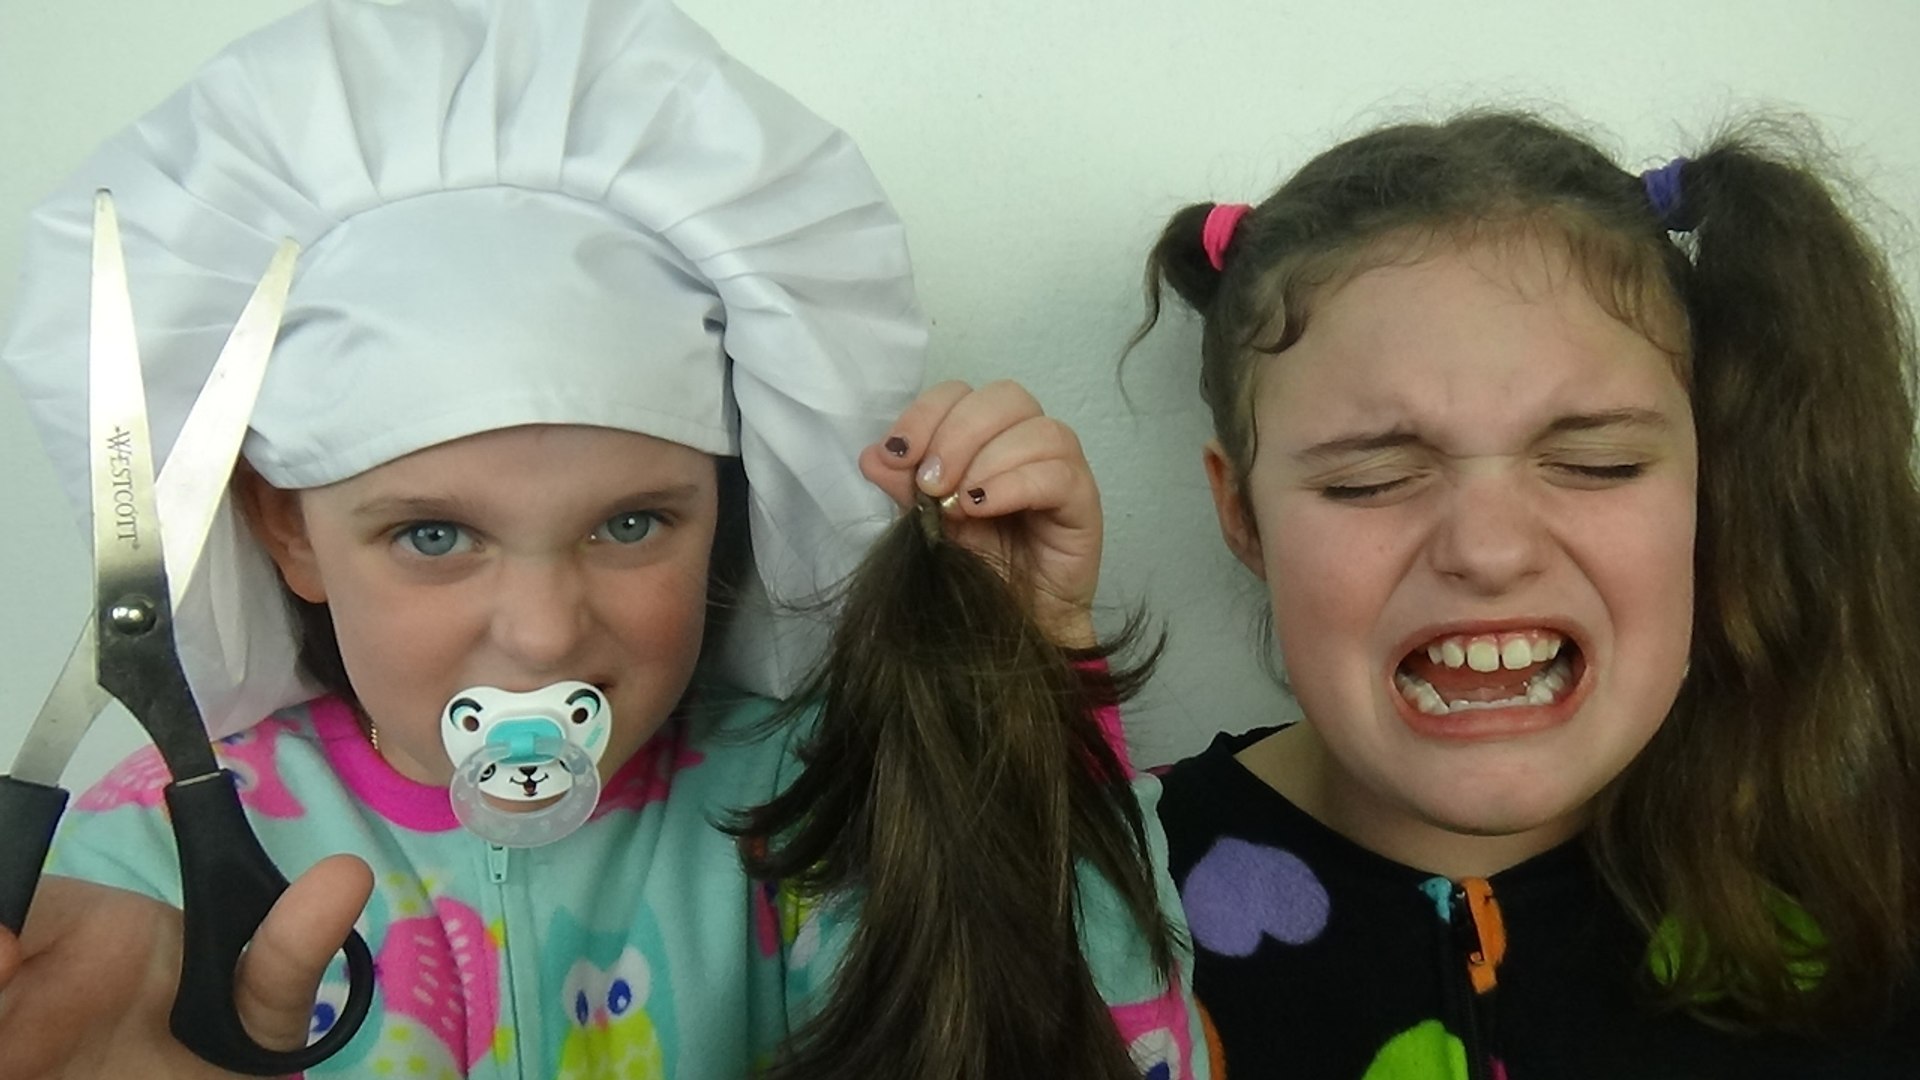 Bad Baby Victoria Cut Annabelle Hair Makeup Fail Toy Freaks Baby Virals